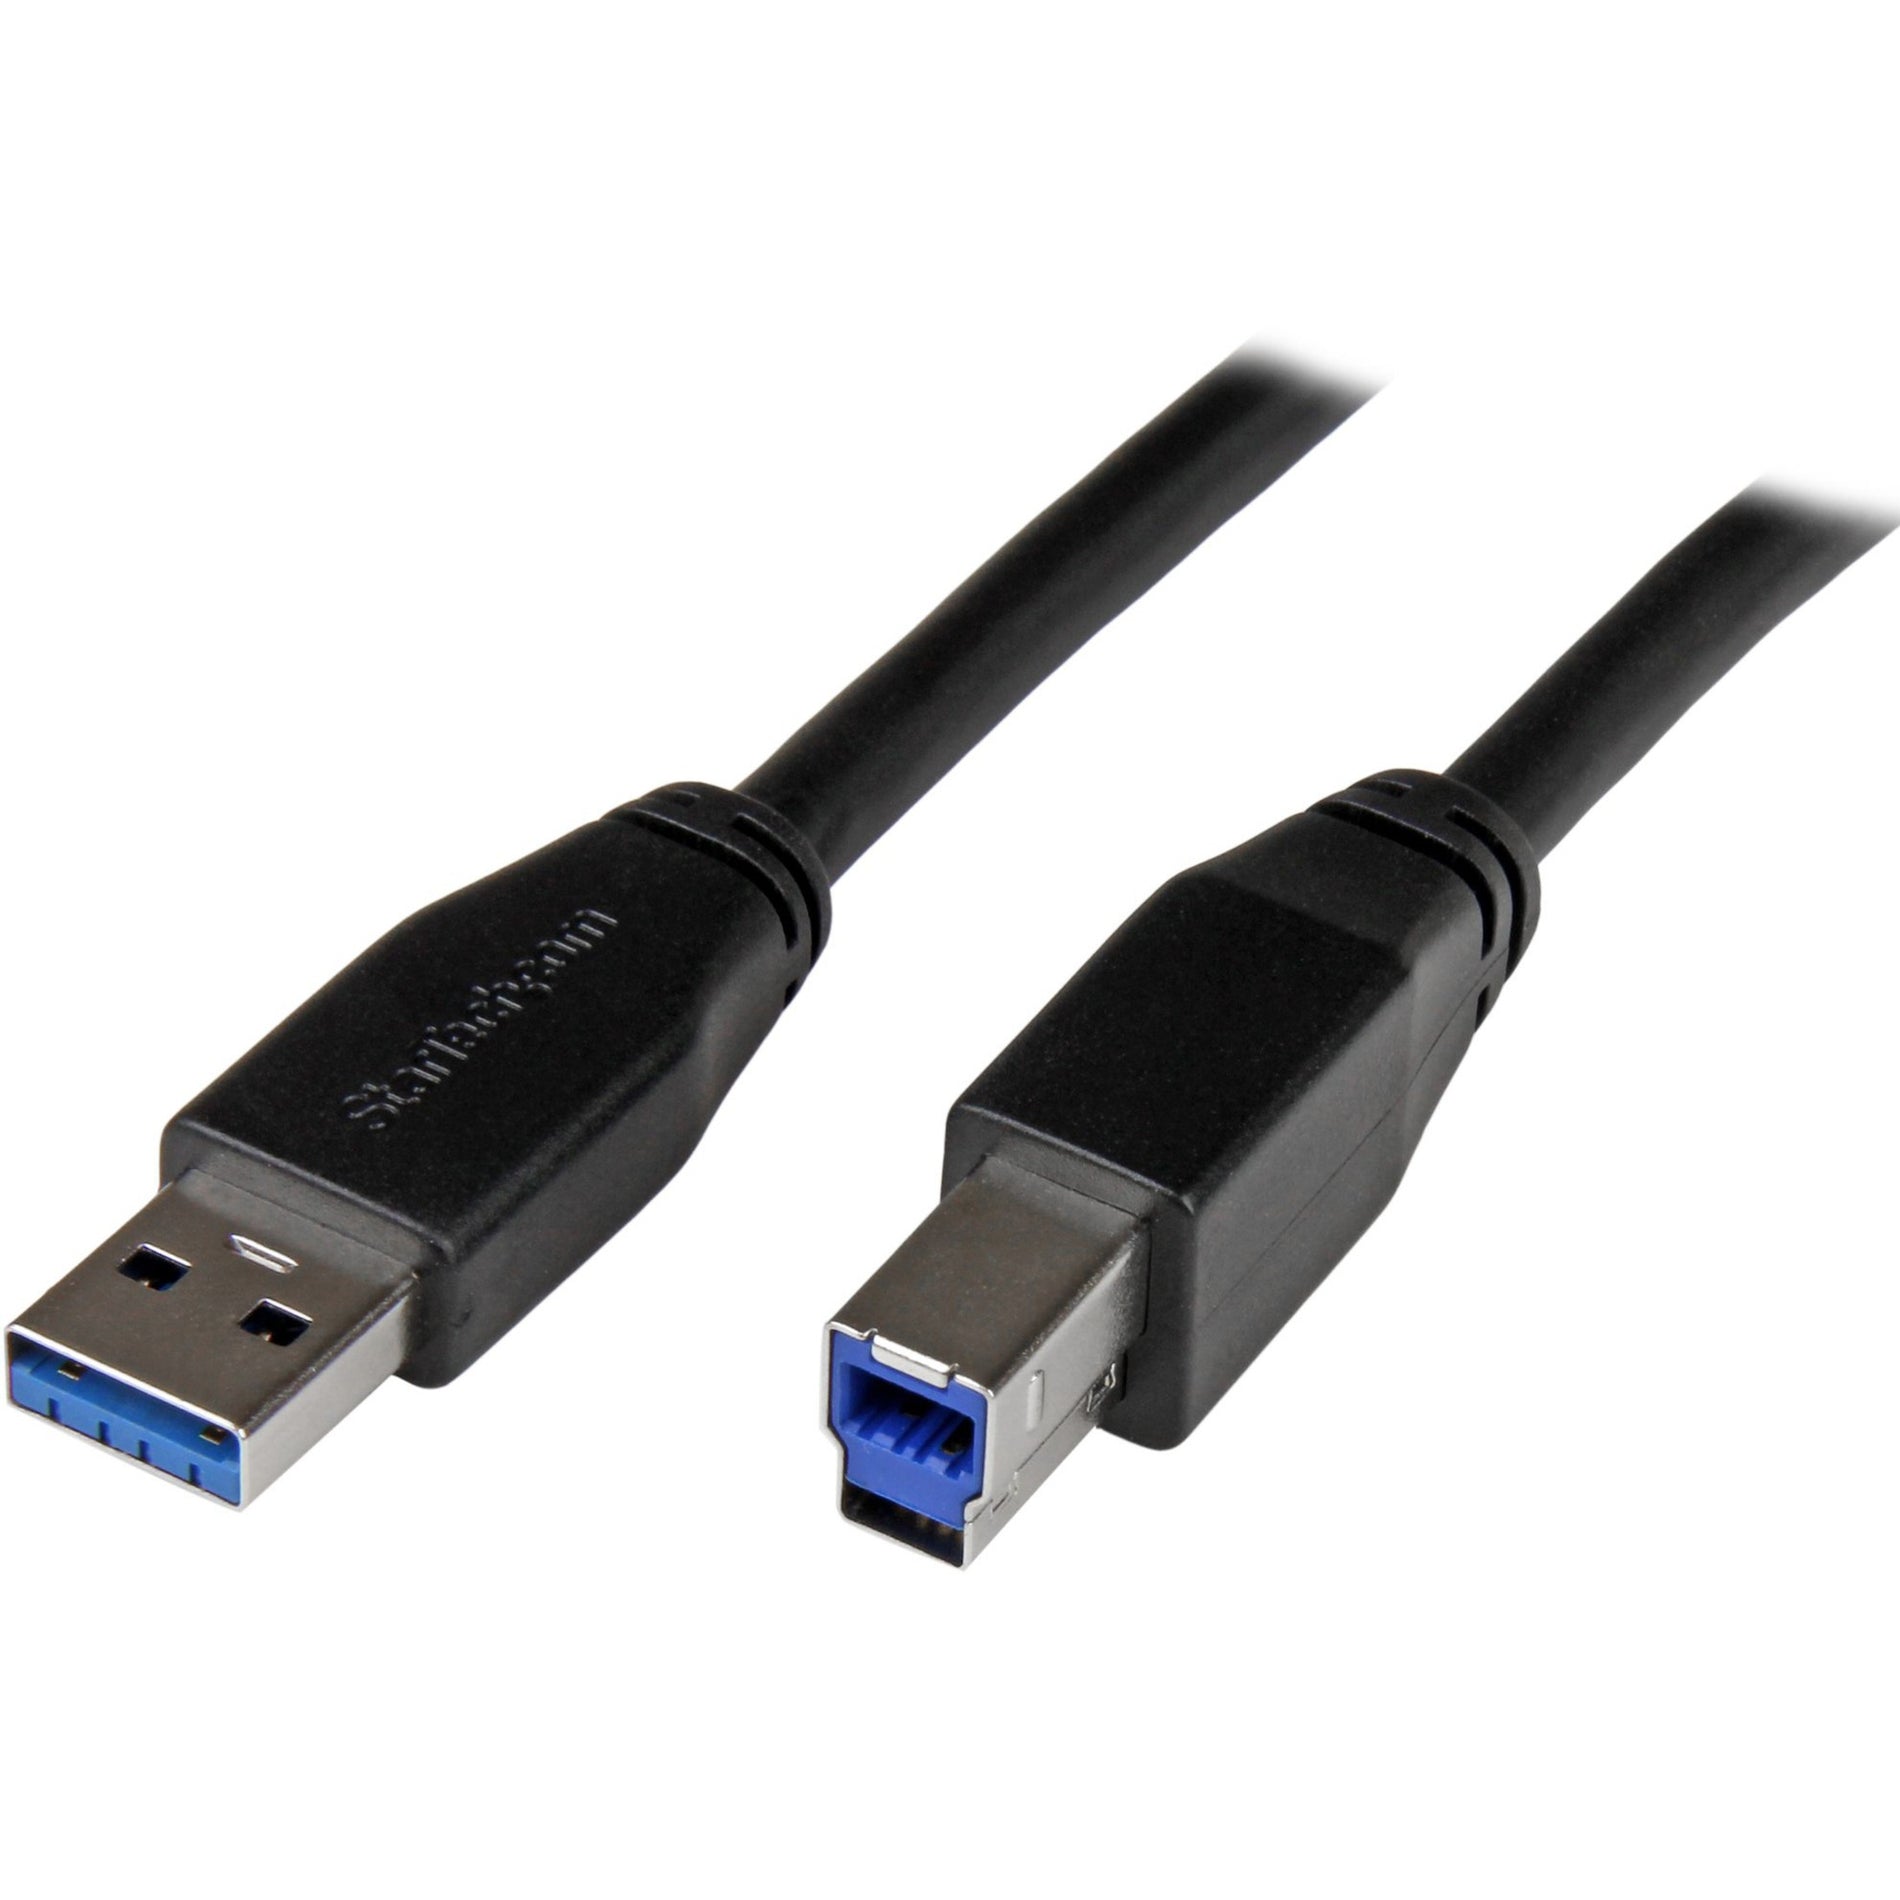 StarTech.com USB3SAB5M Active USB 3.0 USB-A to USB-B Cable - 5m, High-Speed Data Transfer, 16.40 ft Length